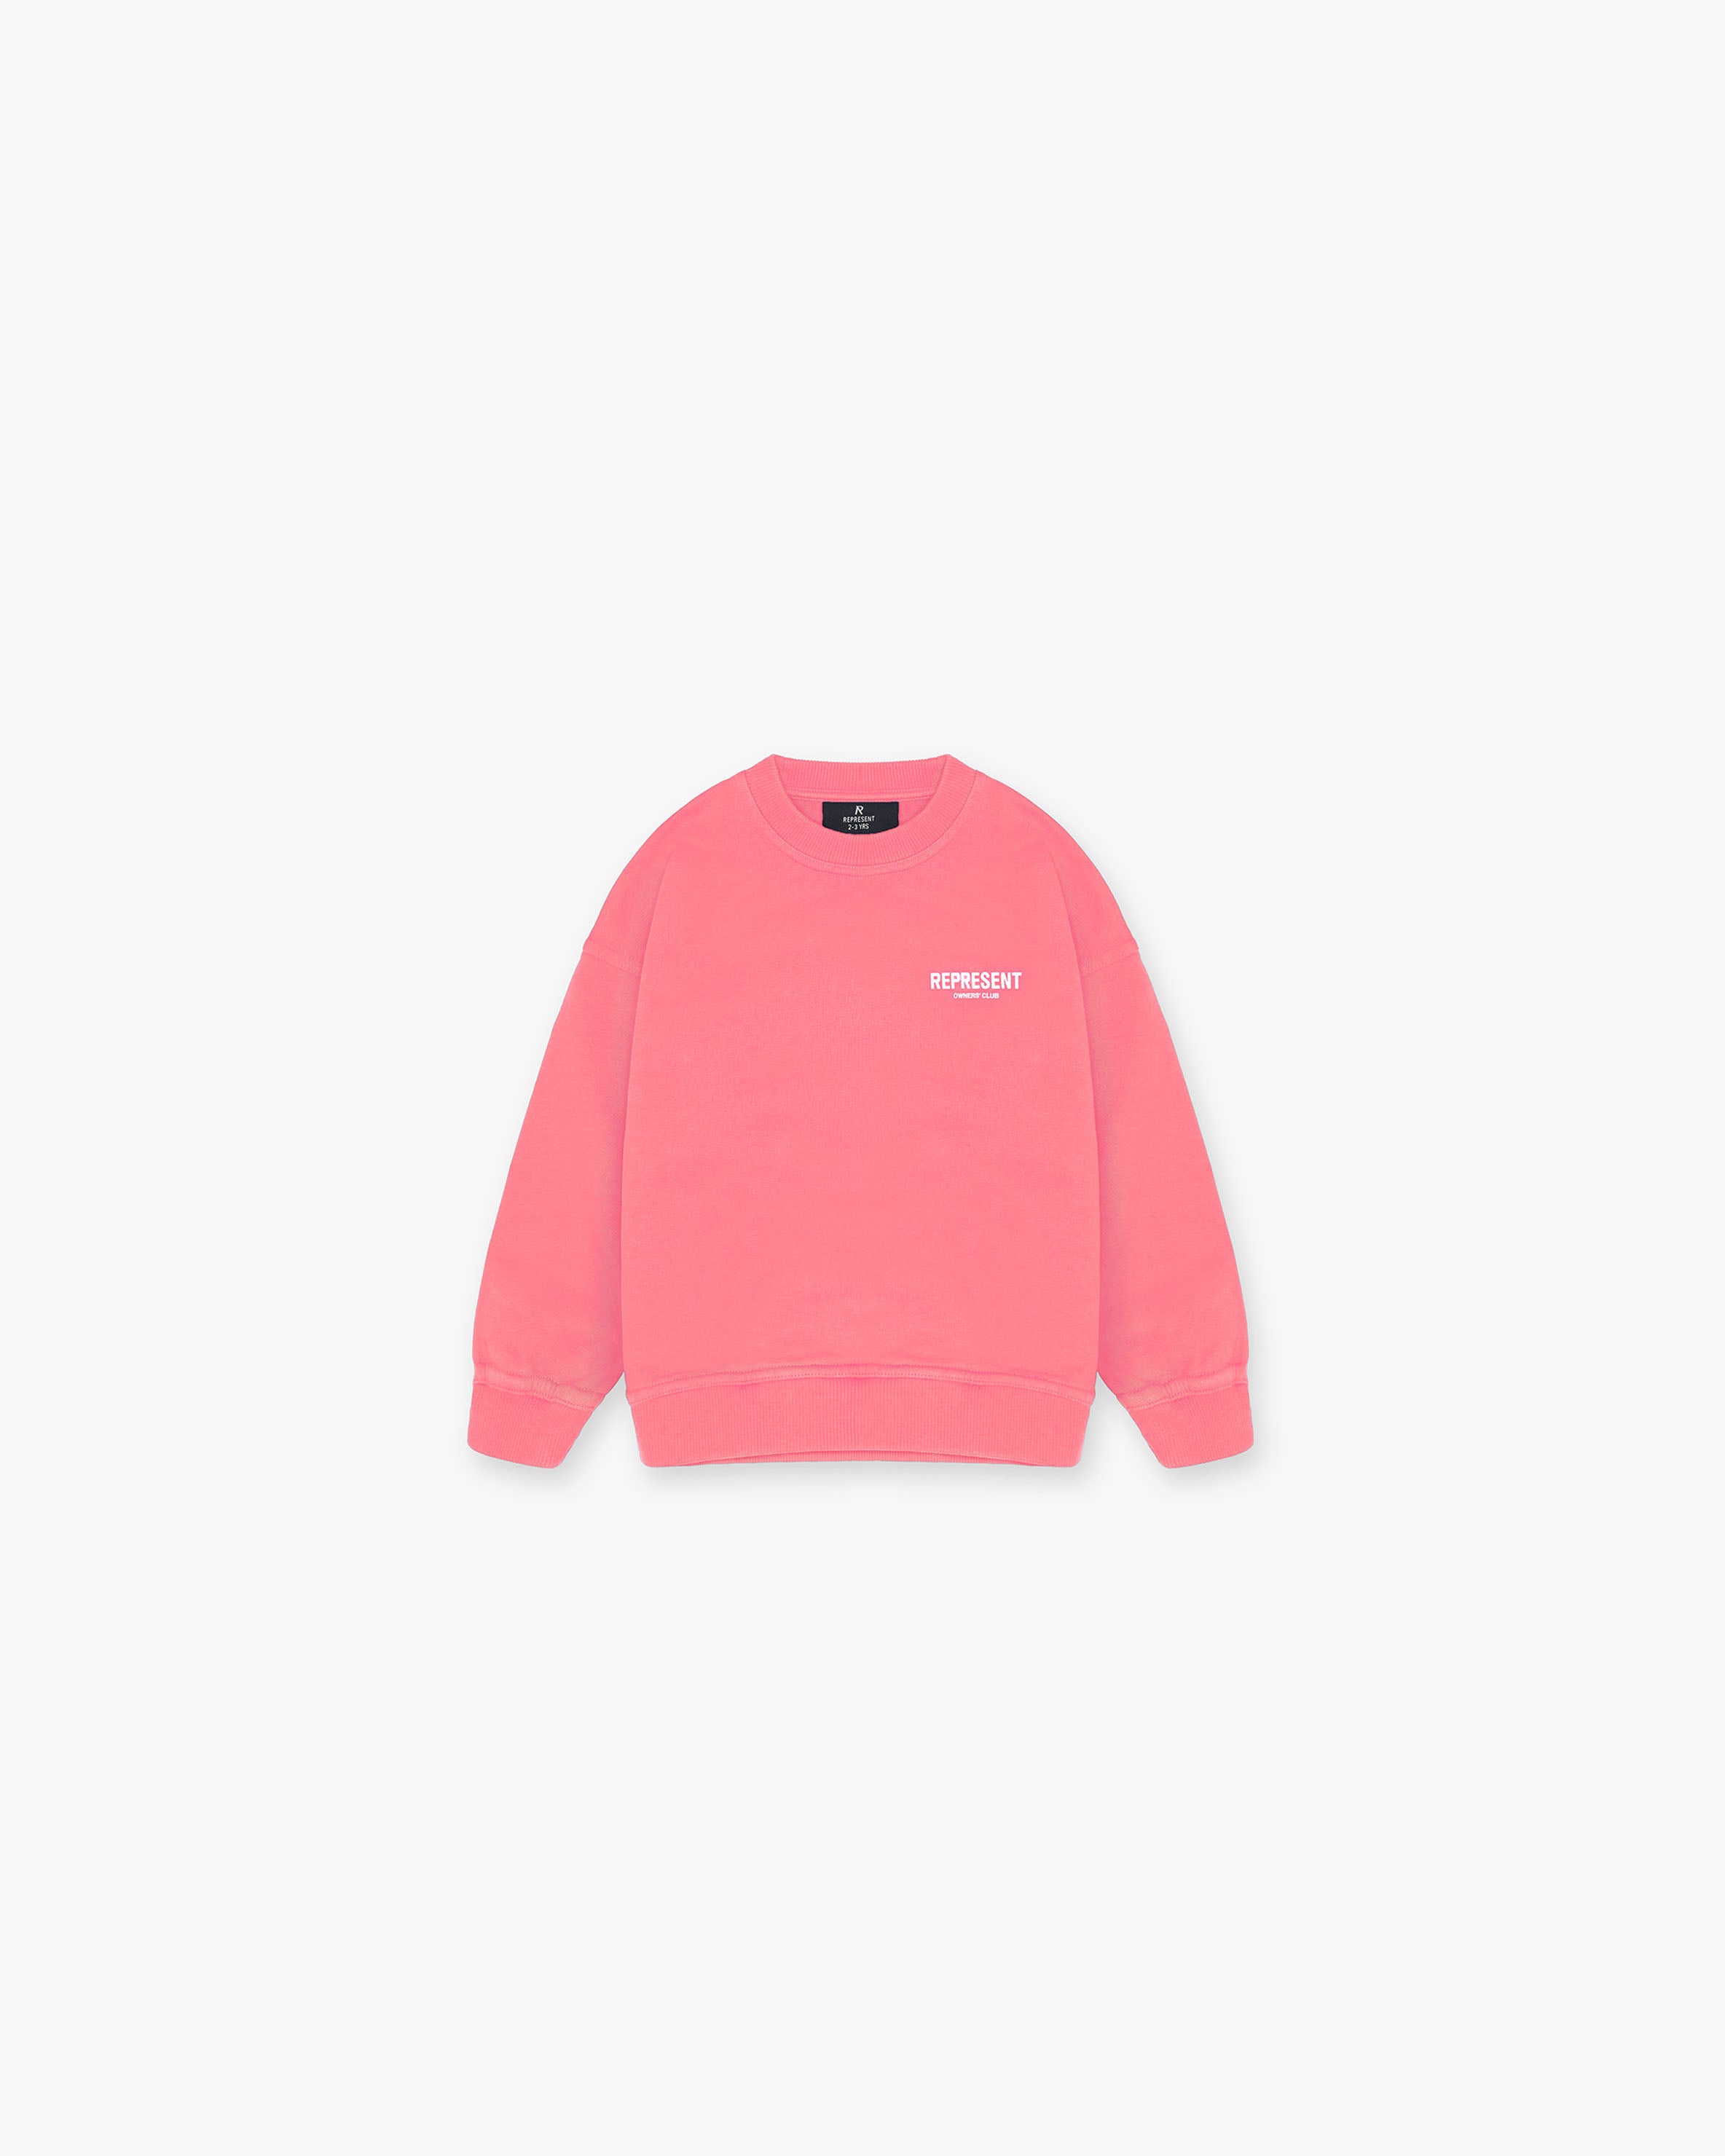 Represent Mini Owners Club Sweater - Bubblegum Pink